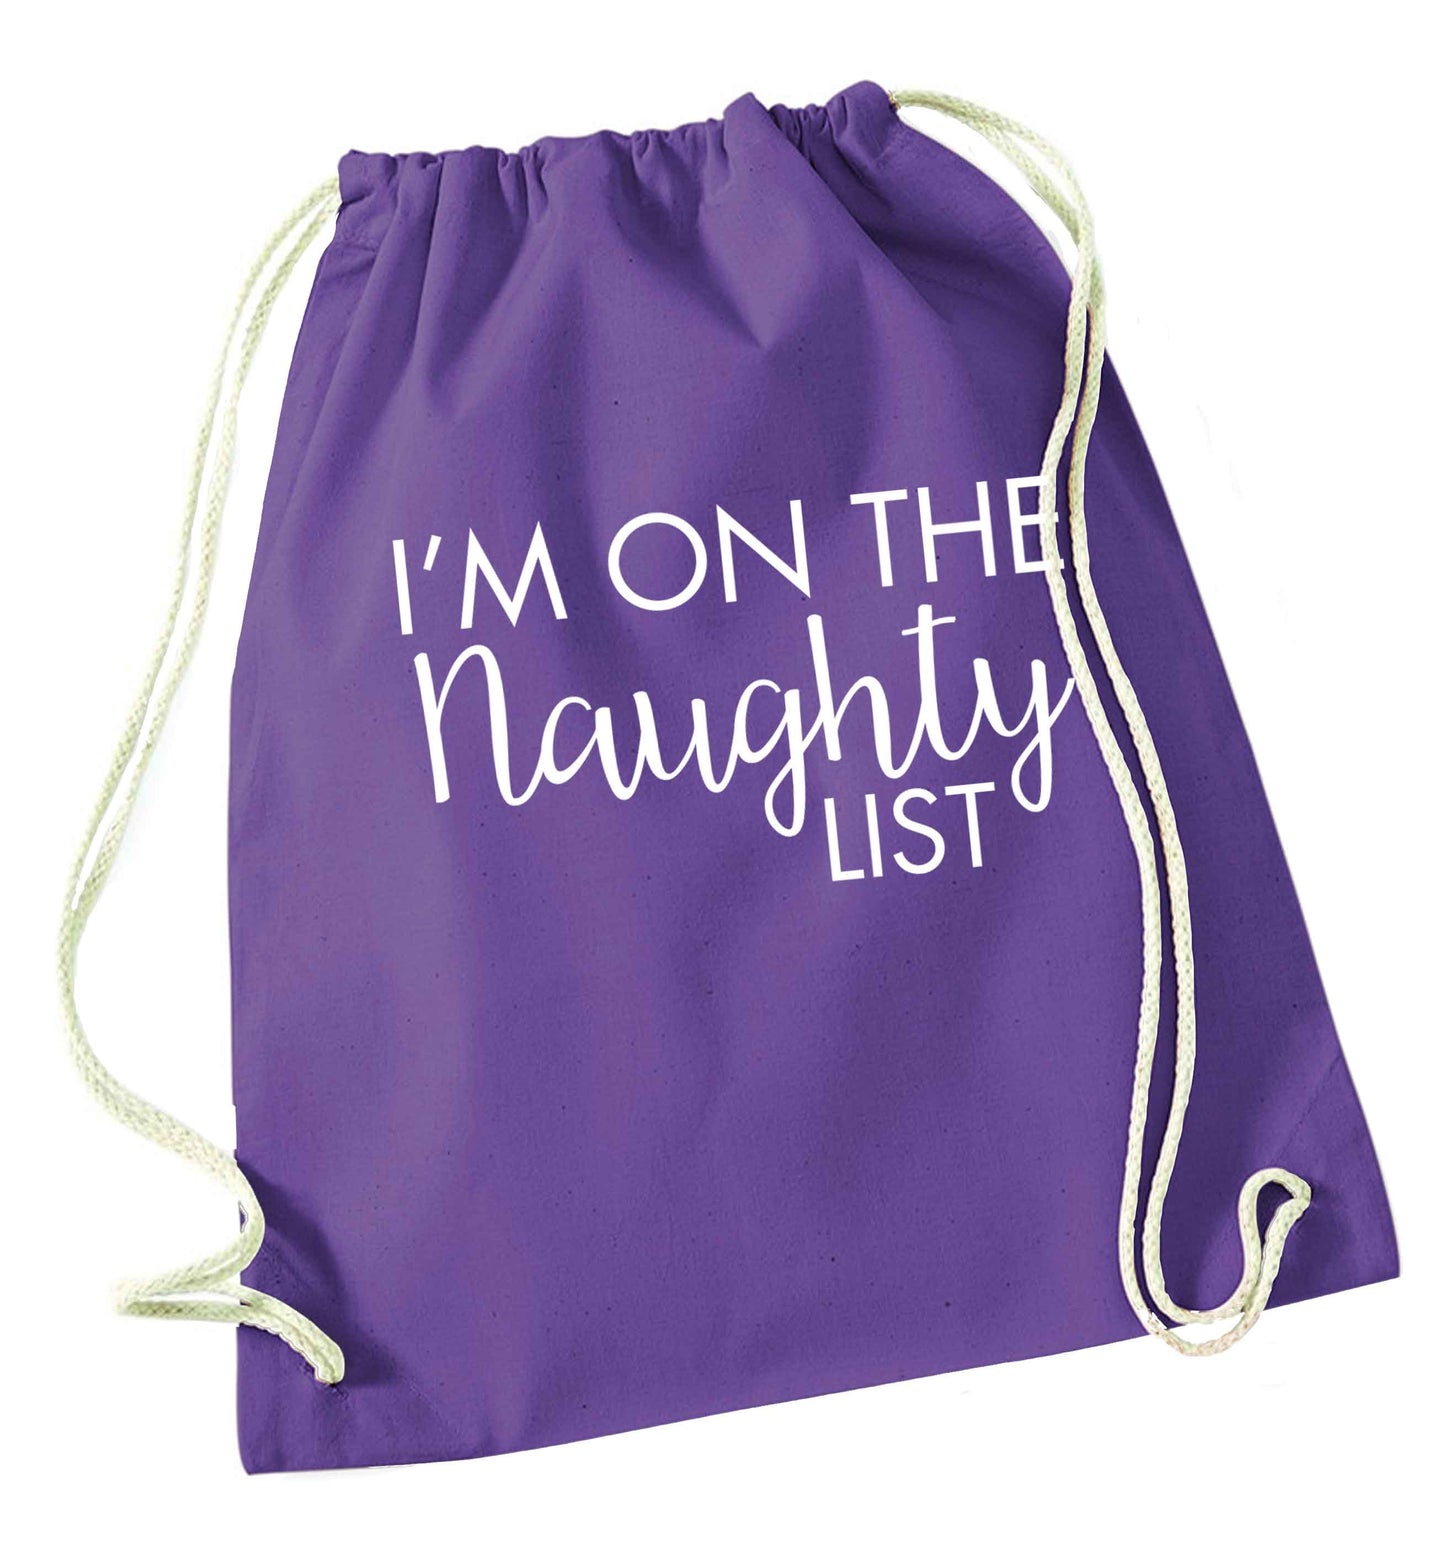 I'm on the naughty list purple drawstring bag